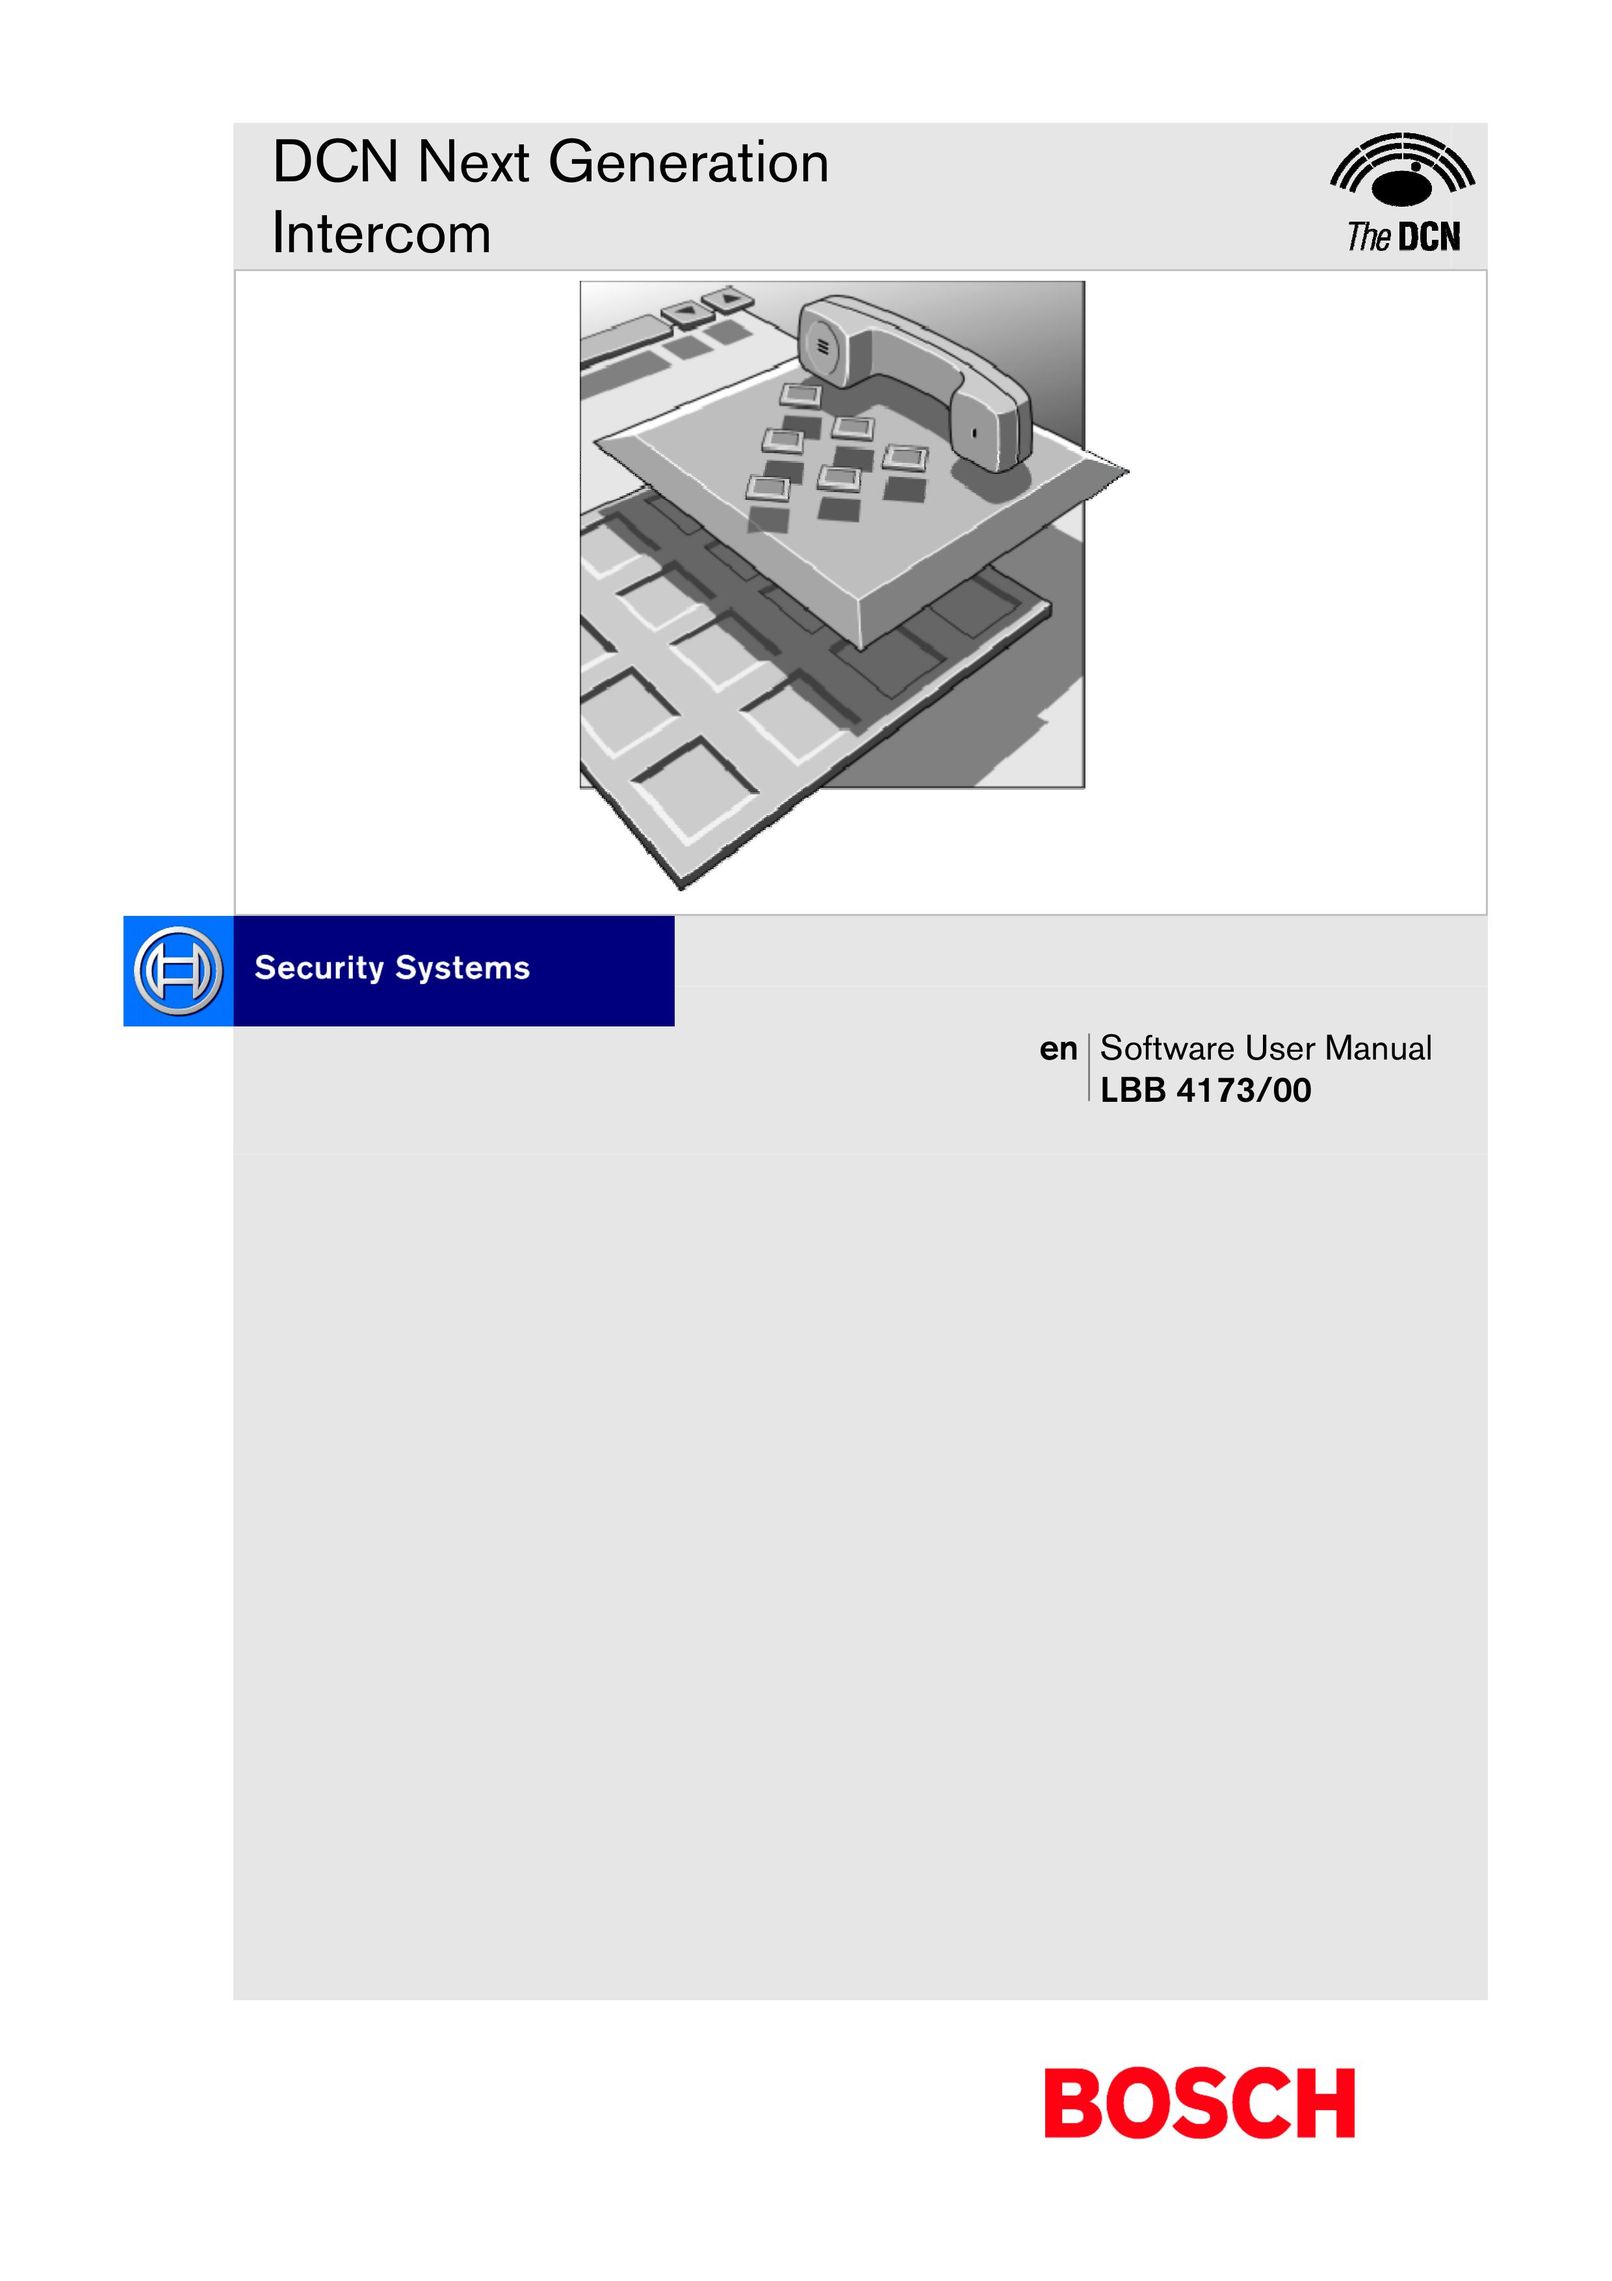 Bosch Appliances 0 Intercom System User Manual